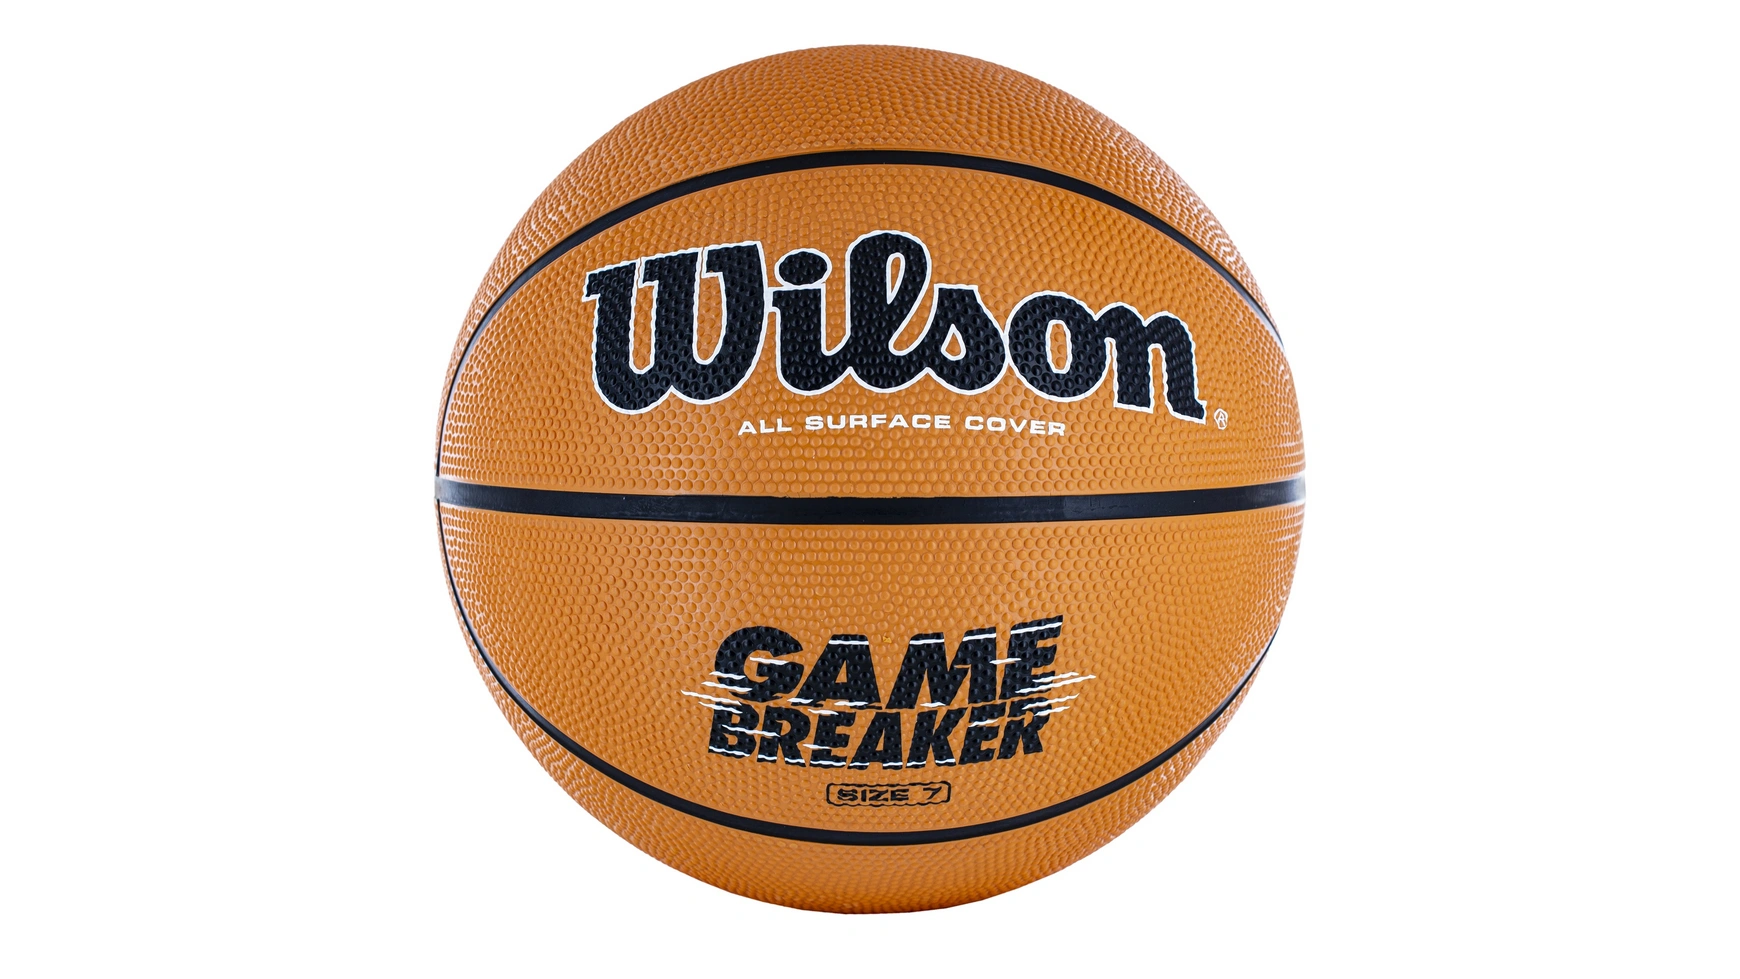 Wilson Basketball Gamebreaker, размер 7 jrs yellow purple basketball indoor outdoor 29 5 basketball size 7 streetball valentine s day gift